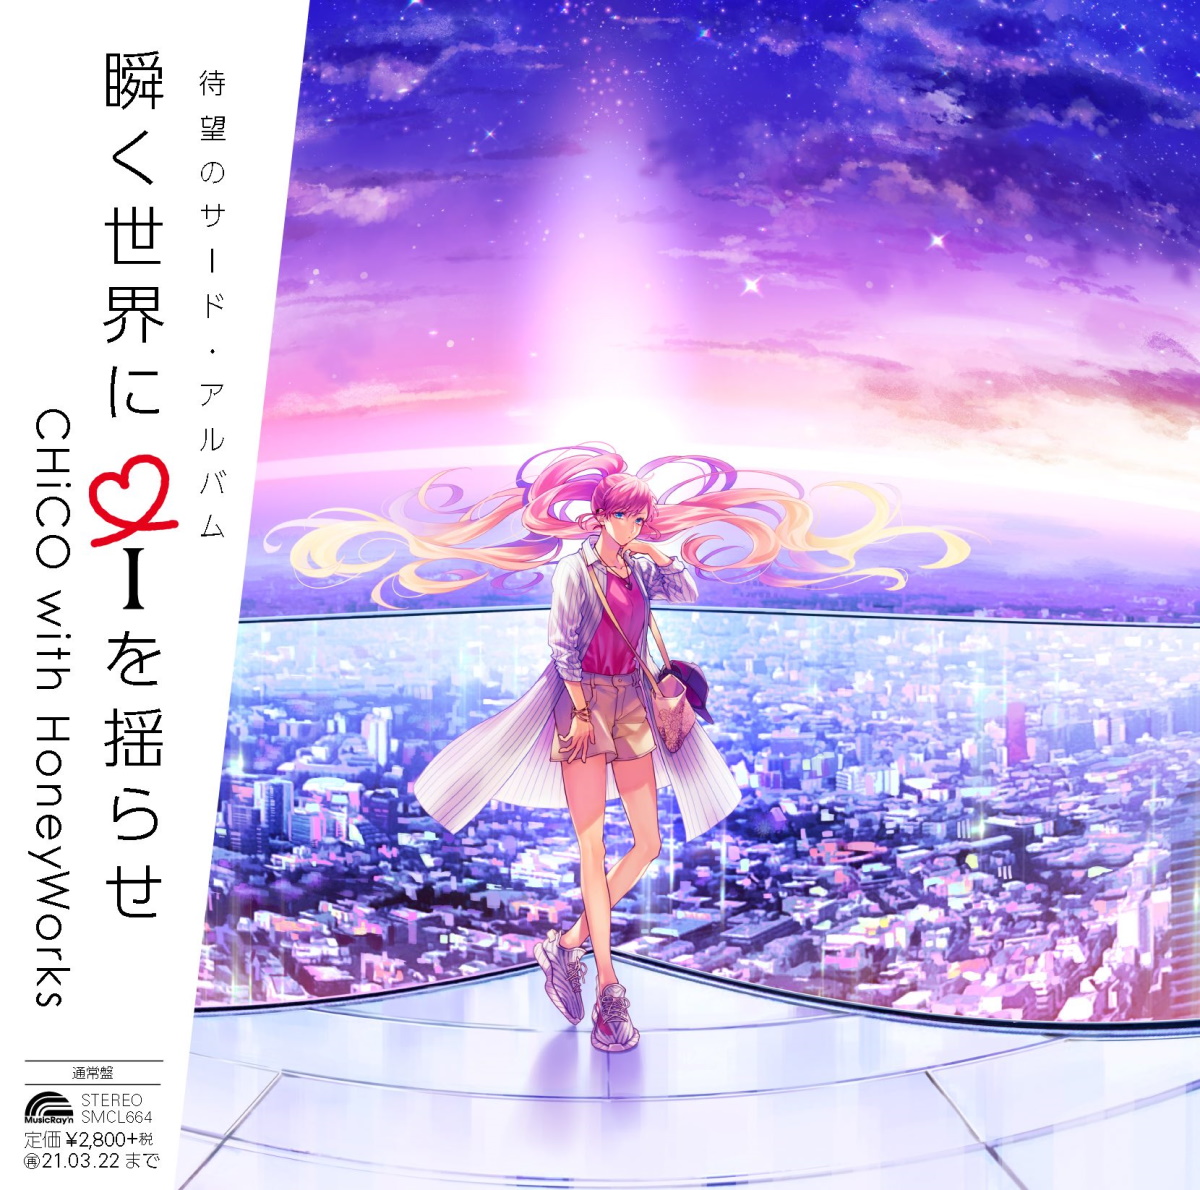 Cover for『CHiCO with HoneyWorks - Watashi wo Korosanaide』from the release『Matataku Sekai ni i wo Yurase』